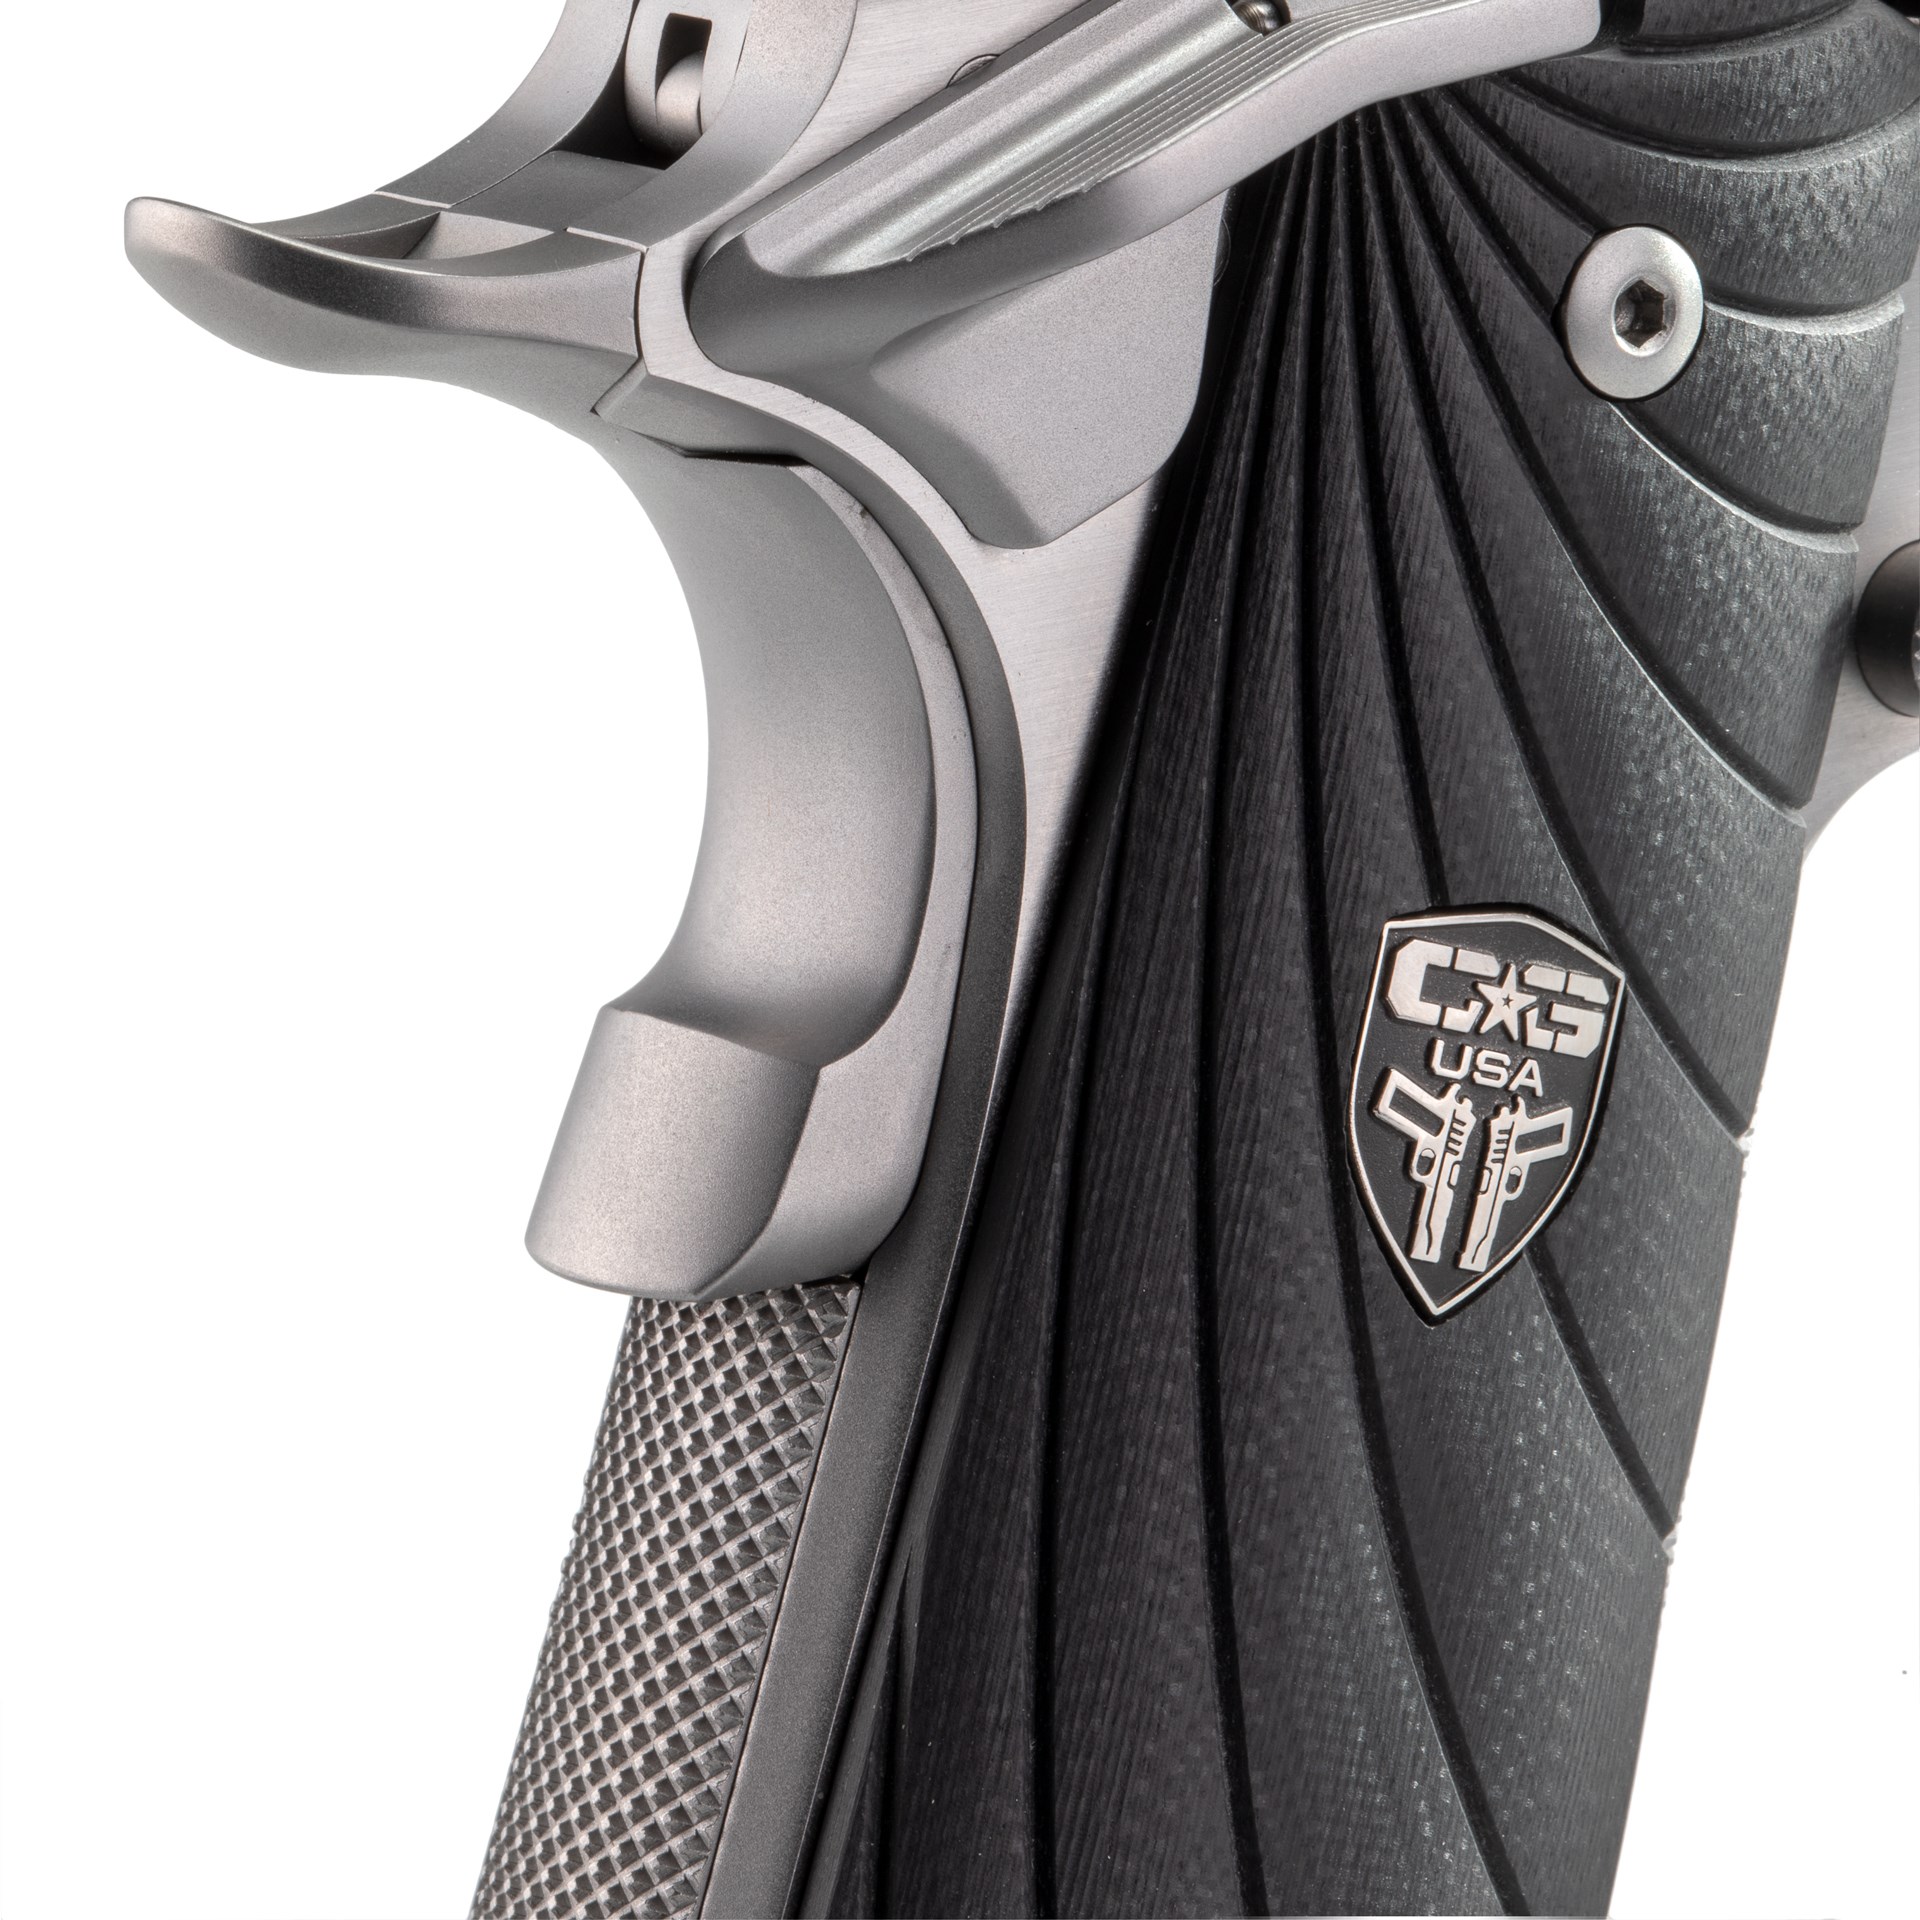 southpaw cabot m1911 backstrap setail closeup safety grip metal g10 gun handgun parts